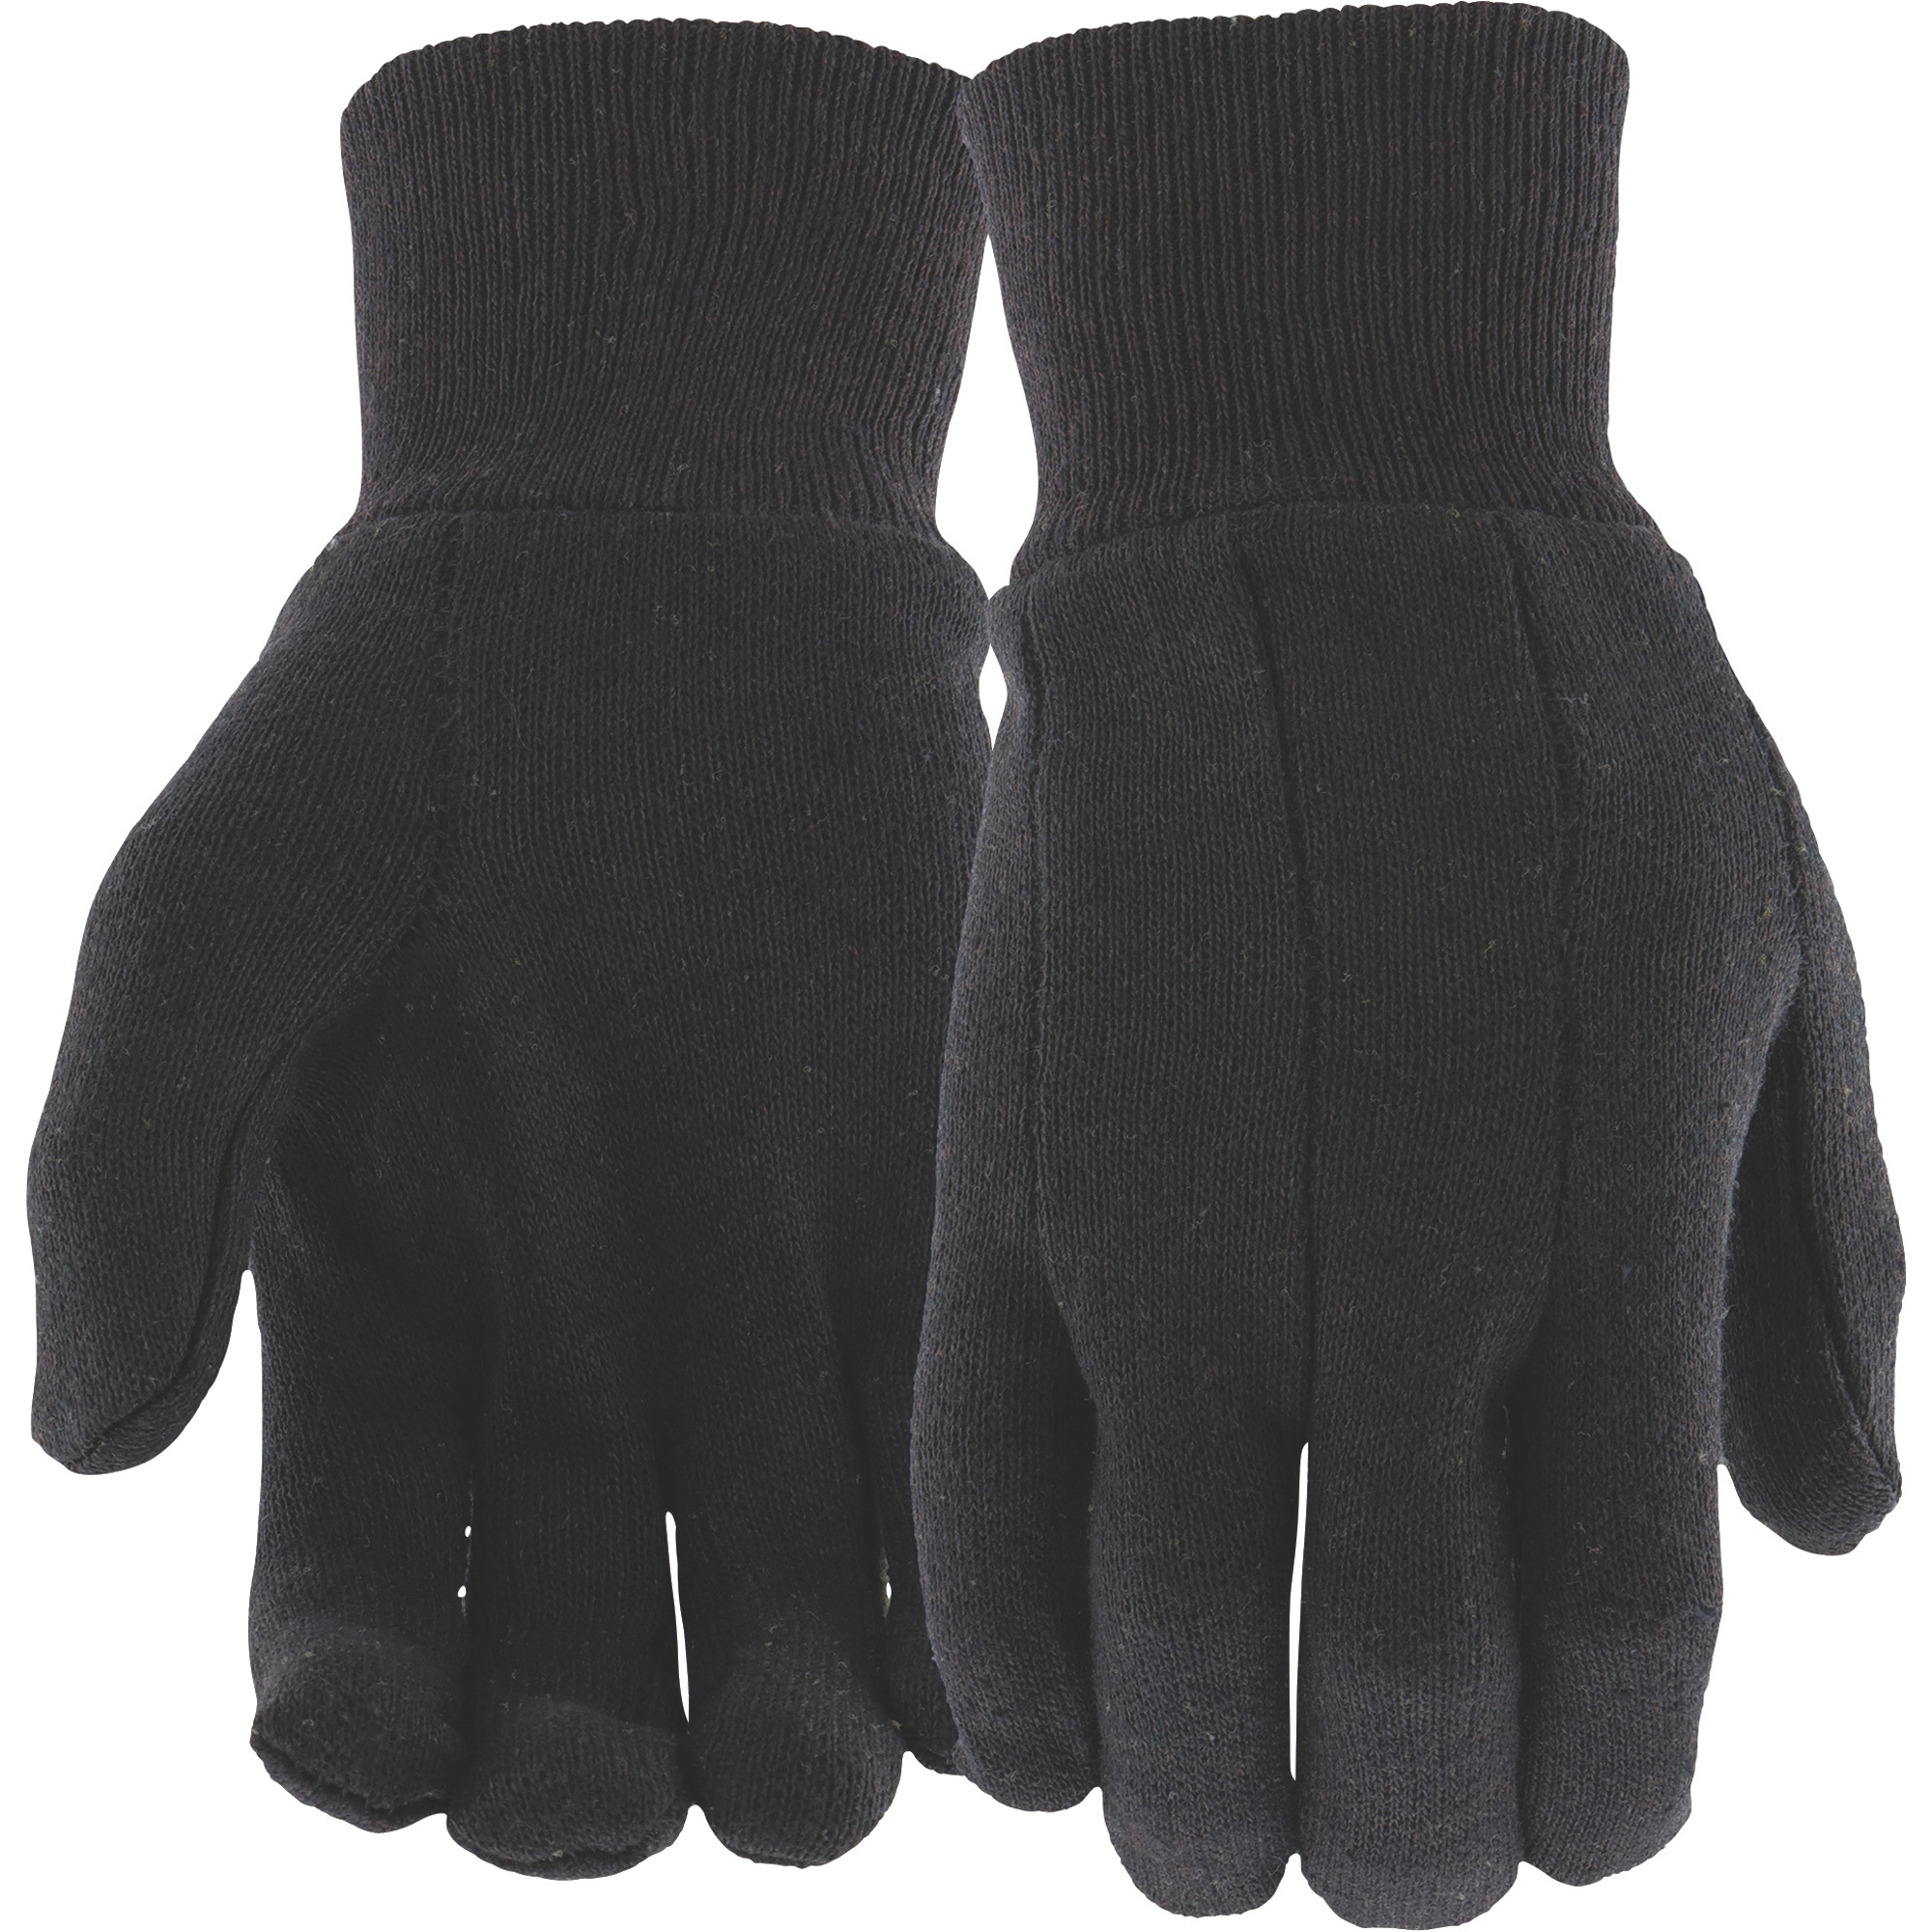 West Chester 12 Pack Brown Jersey Gloves Large, Model 65090L12U